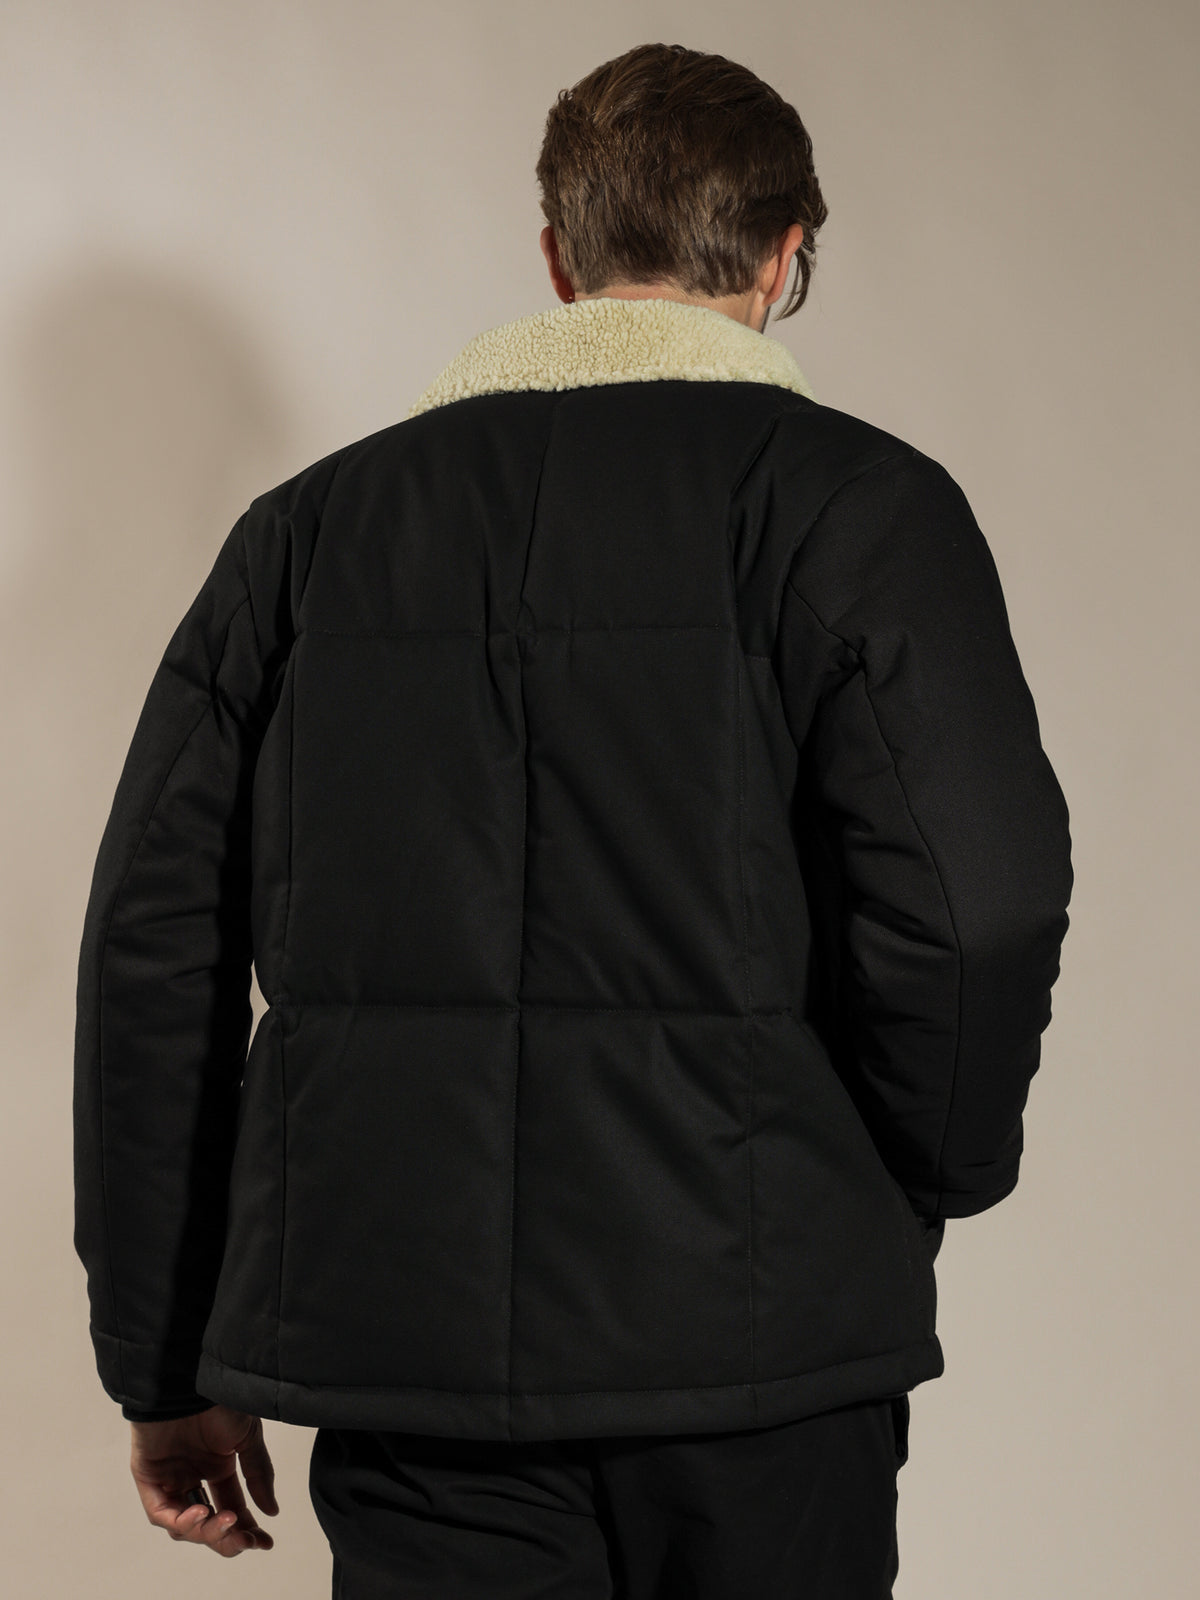 Ezra Workwear Jacket in Black